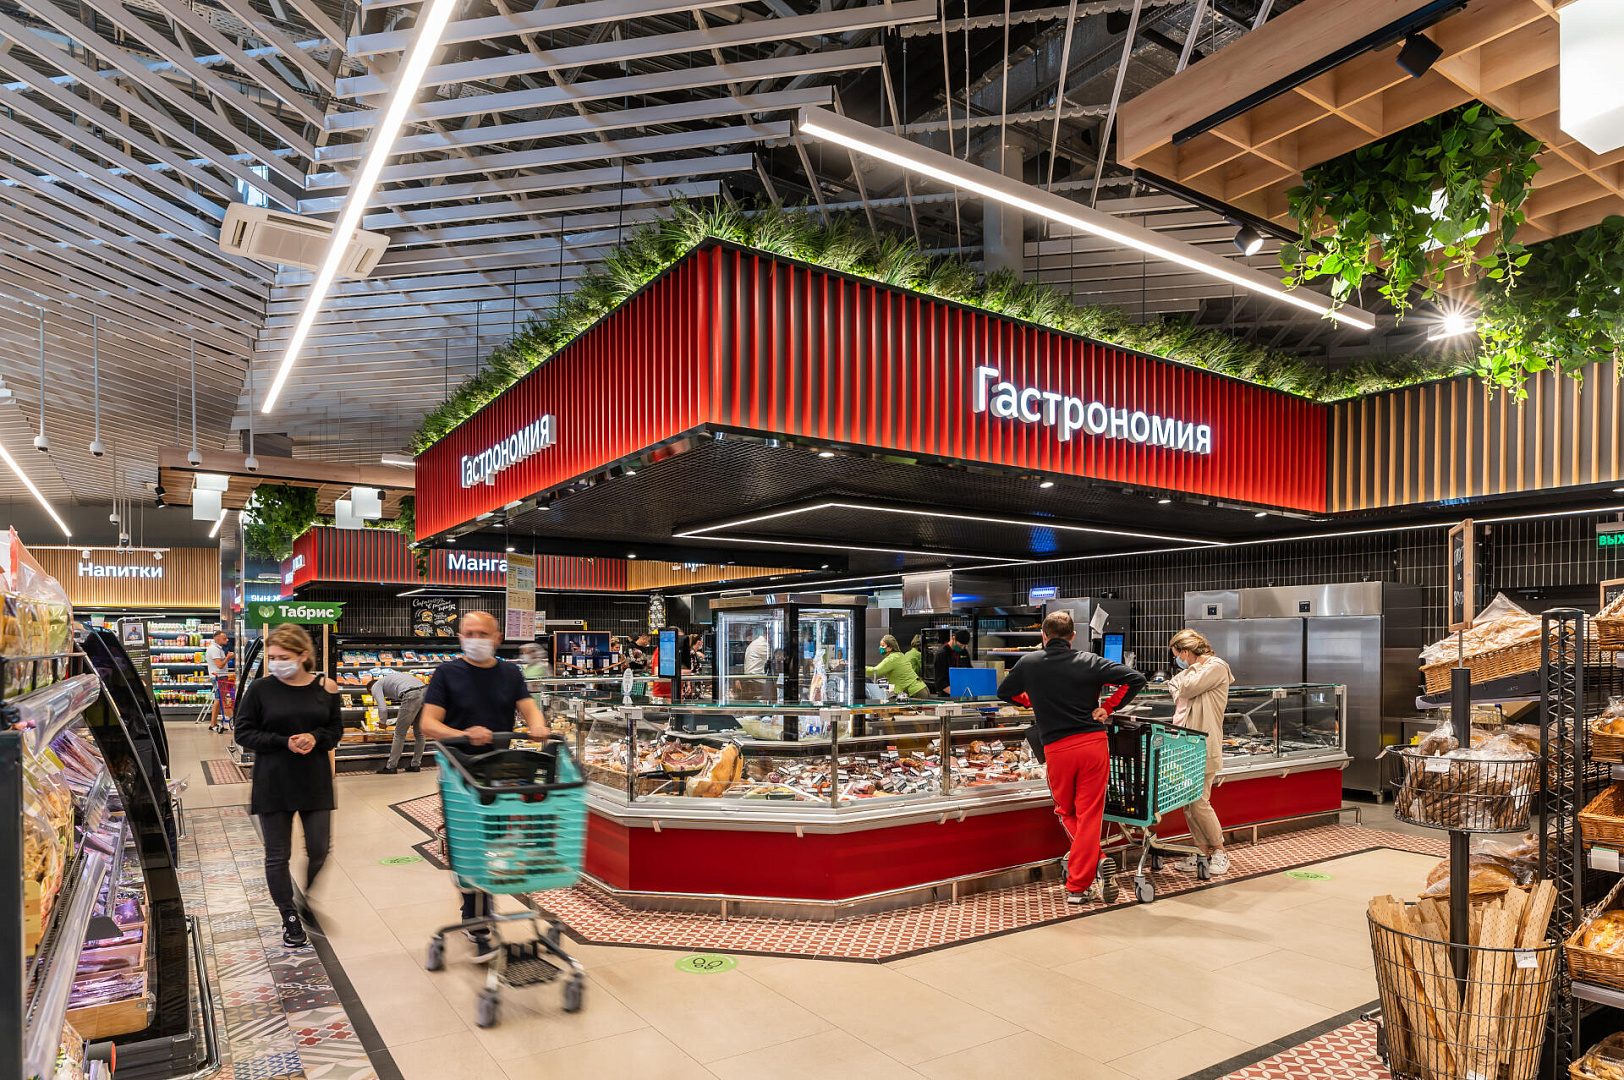 TABRIS Supermarket in Sochi by PROJECT architectural bureau